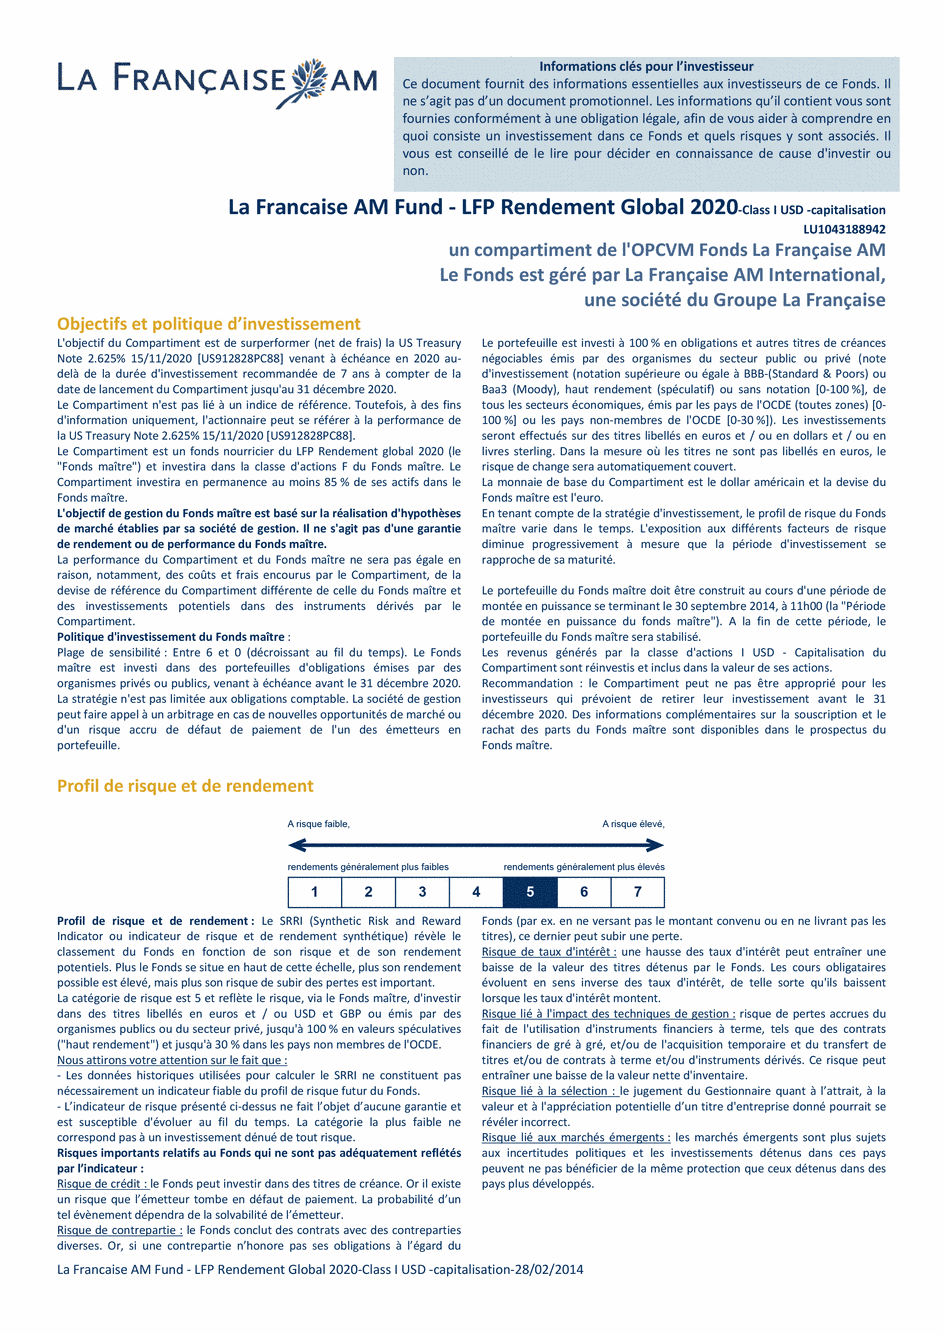 DICI La Française LUX - Rendement Global 2020 USD - I (C) USD - 28/02/2014 - French